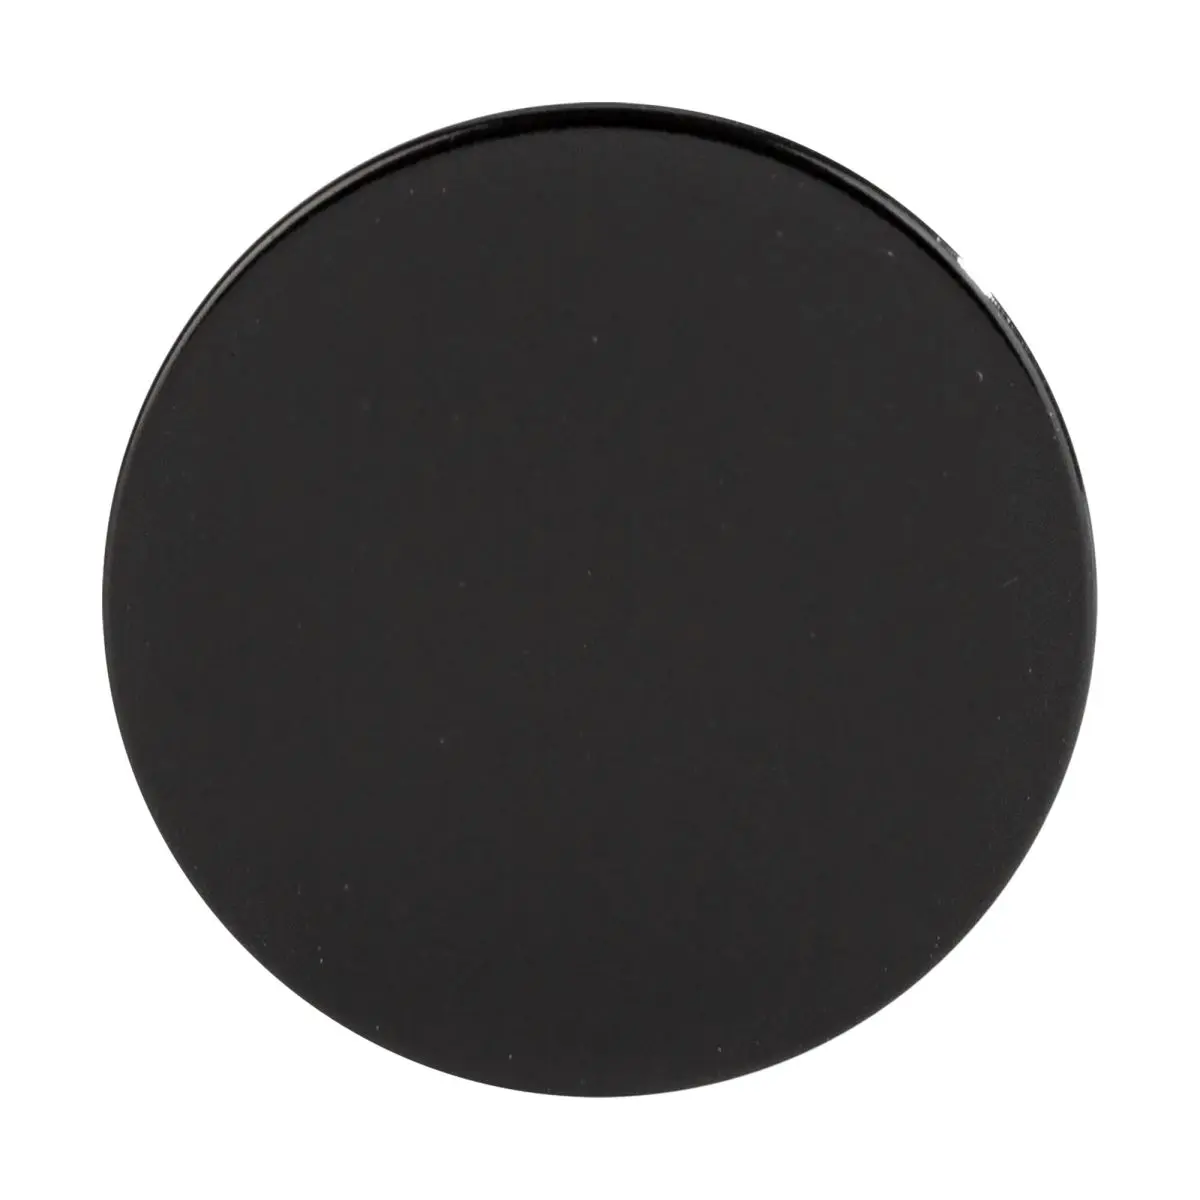 Metallscheibe flexiMAGS - 40 mm, schwarz, 10er Set